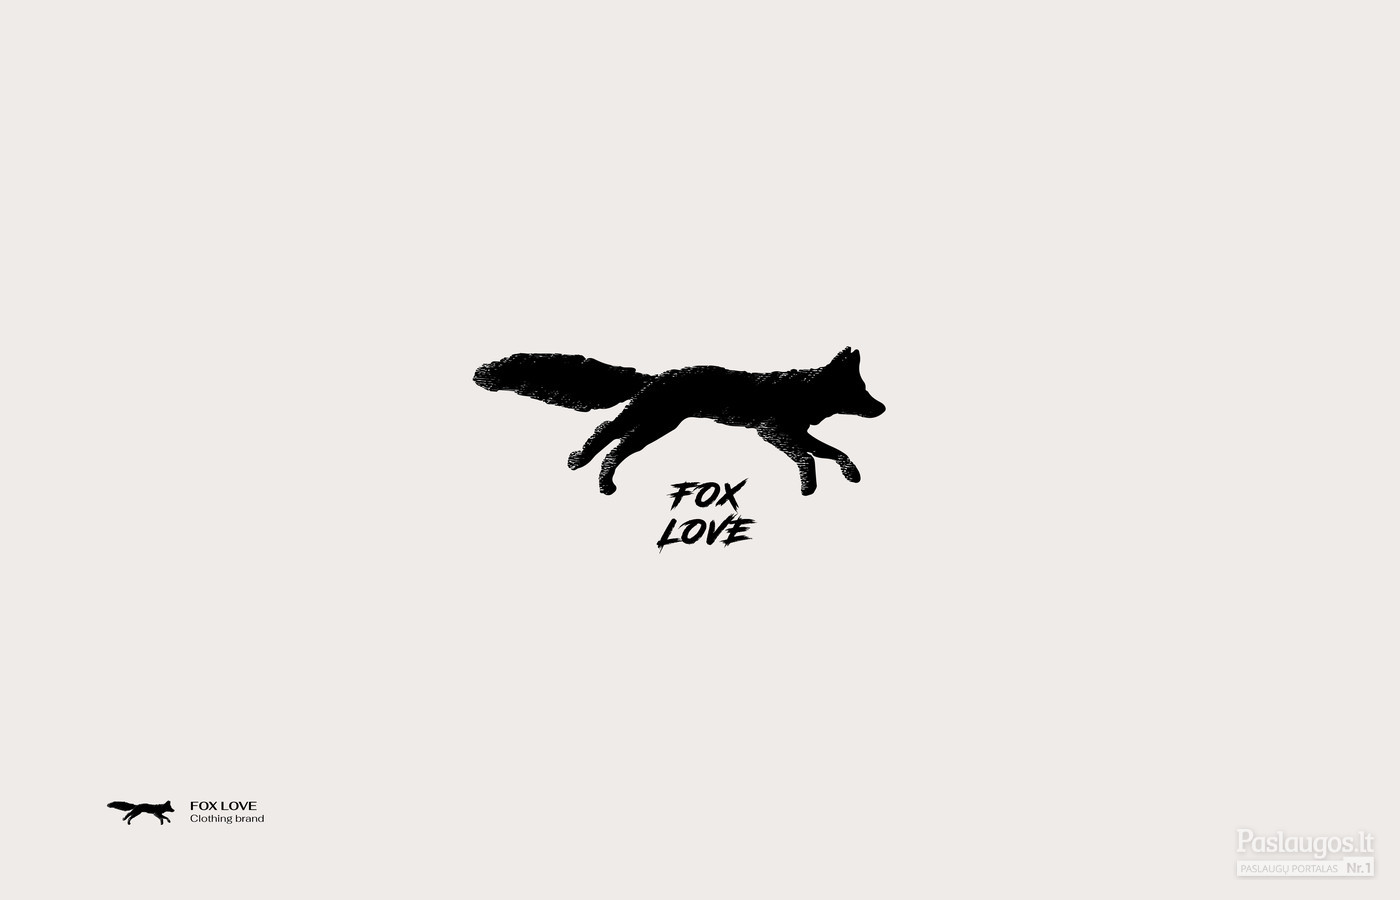 FOX LOVE - Clothing brand